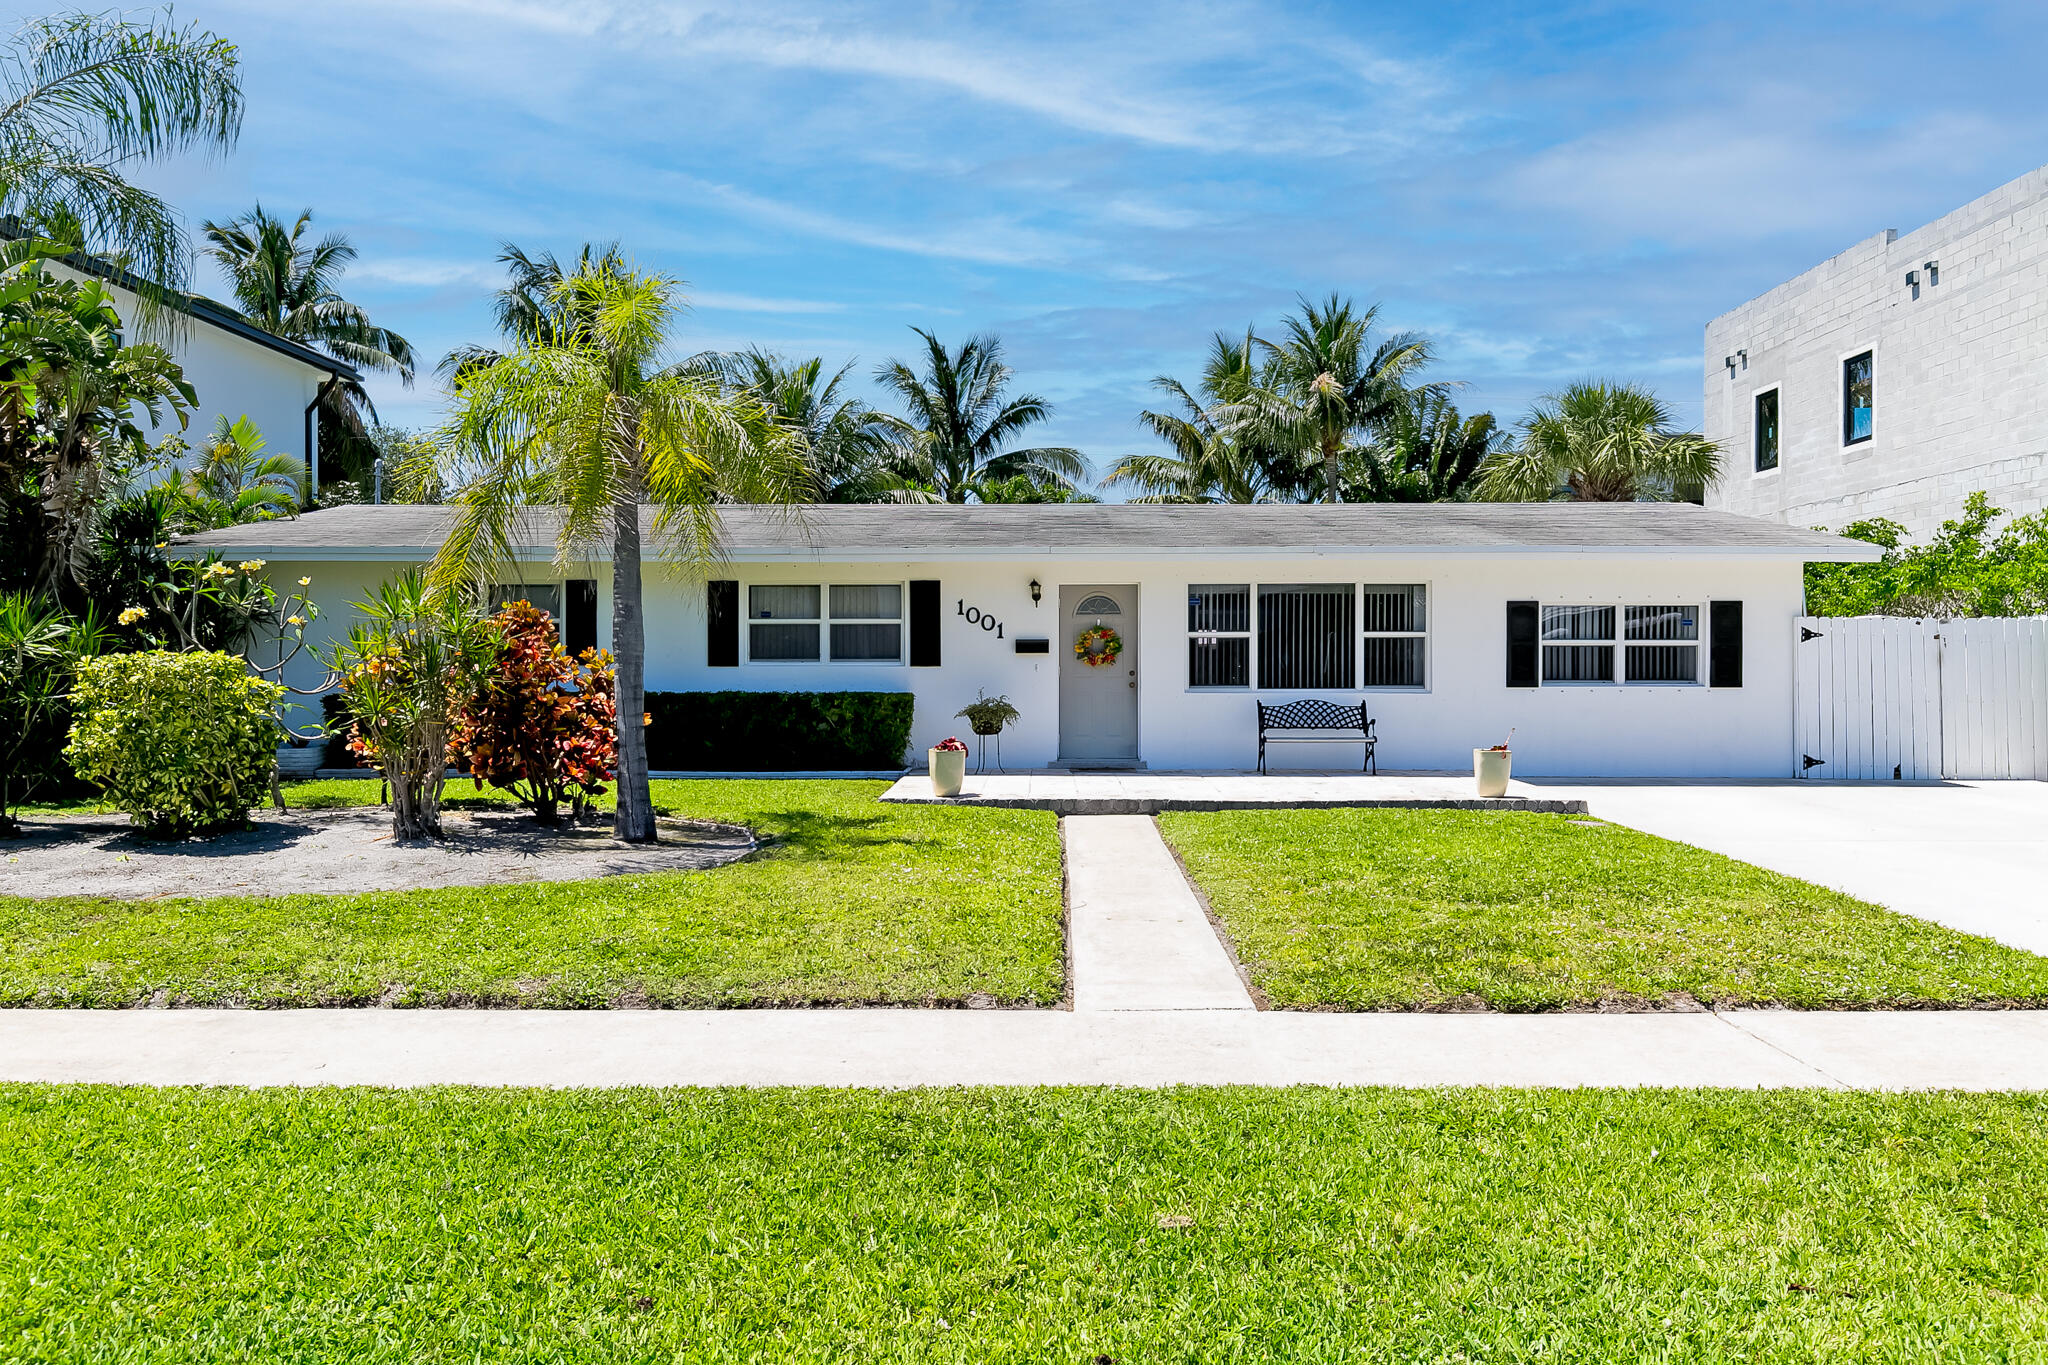 Property for Sale at 1001 Ne 3rd Avenue, Boca Raton, Palm Beach County, Florida - Bedrooms: 5 
Bathrooms: 2.5  - $1,850,000